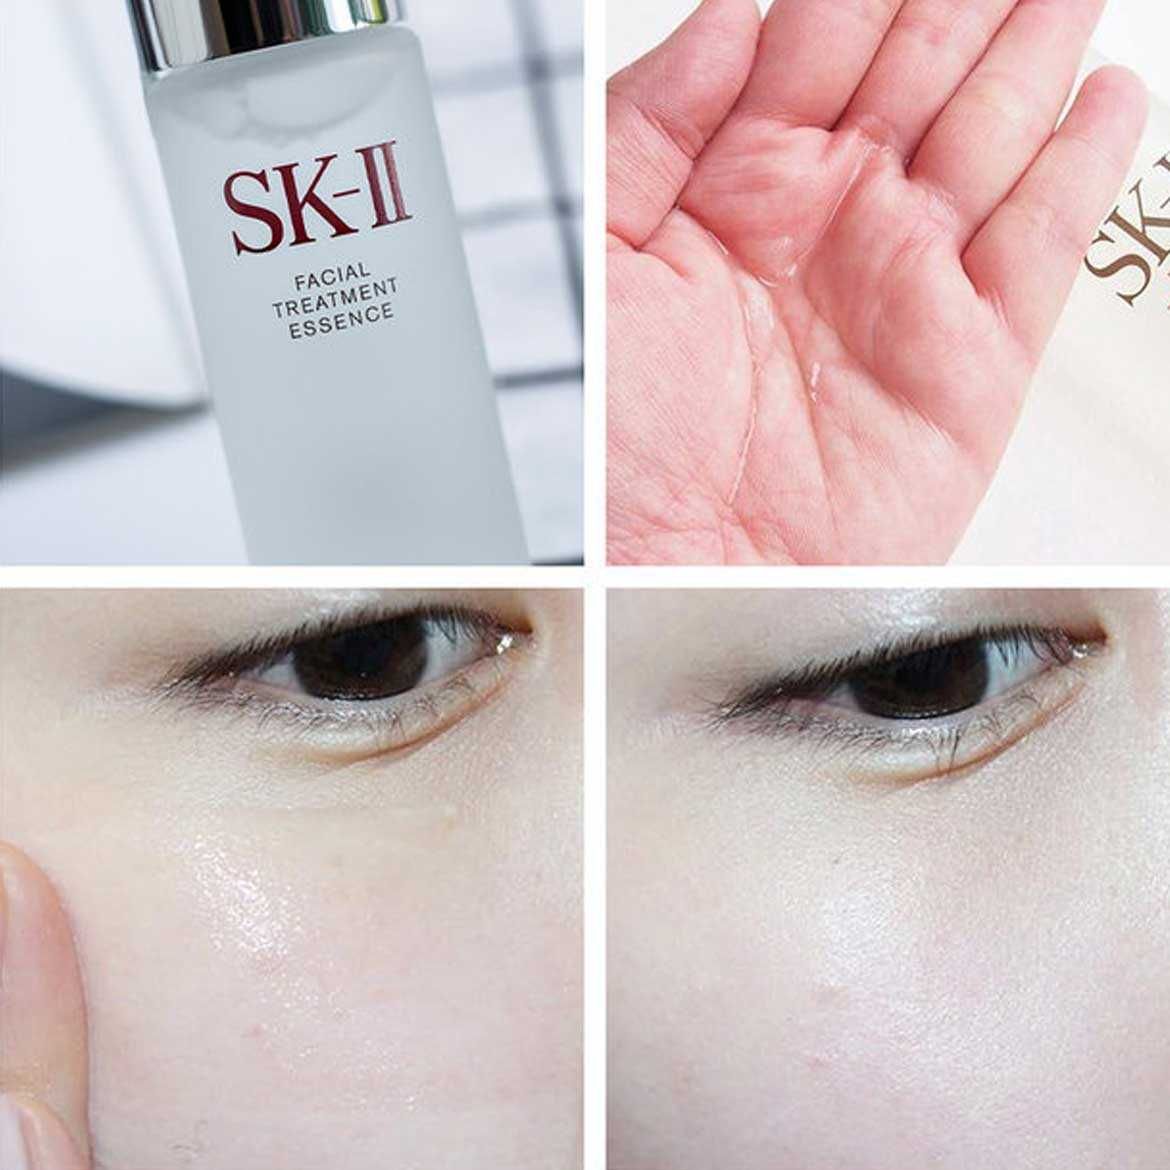  Nước Thần SK-II Facial Treatment Essence 30ml 